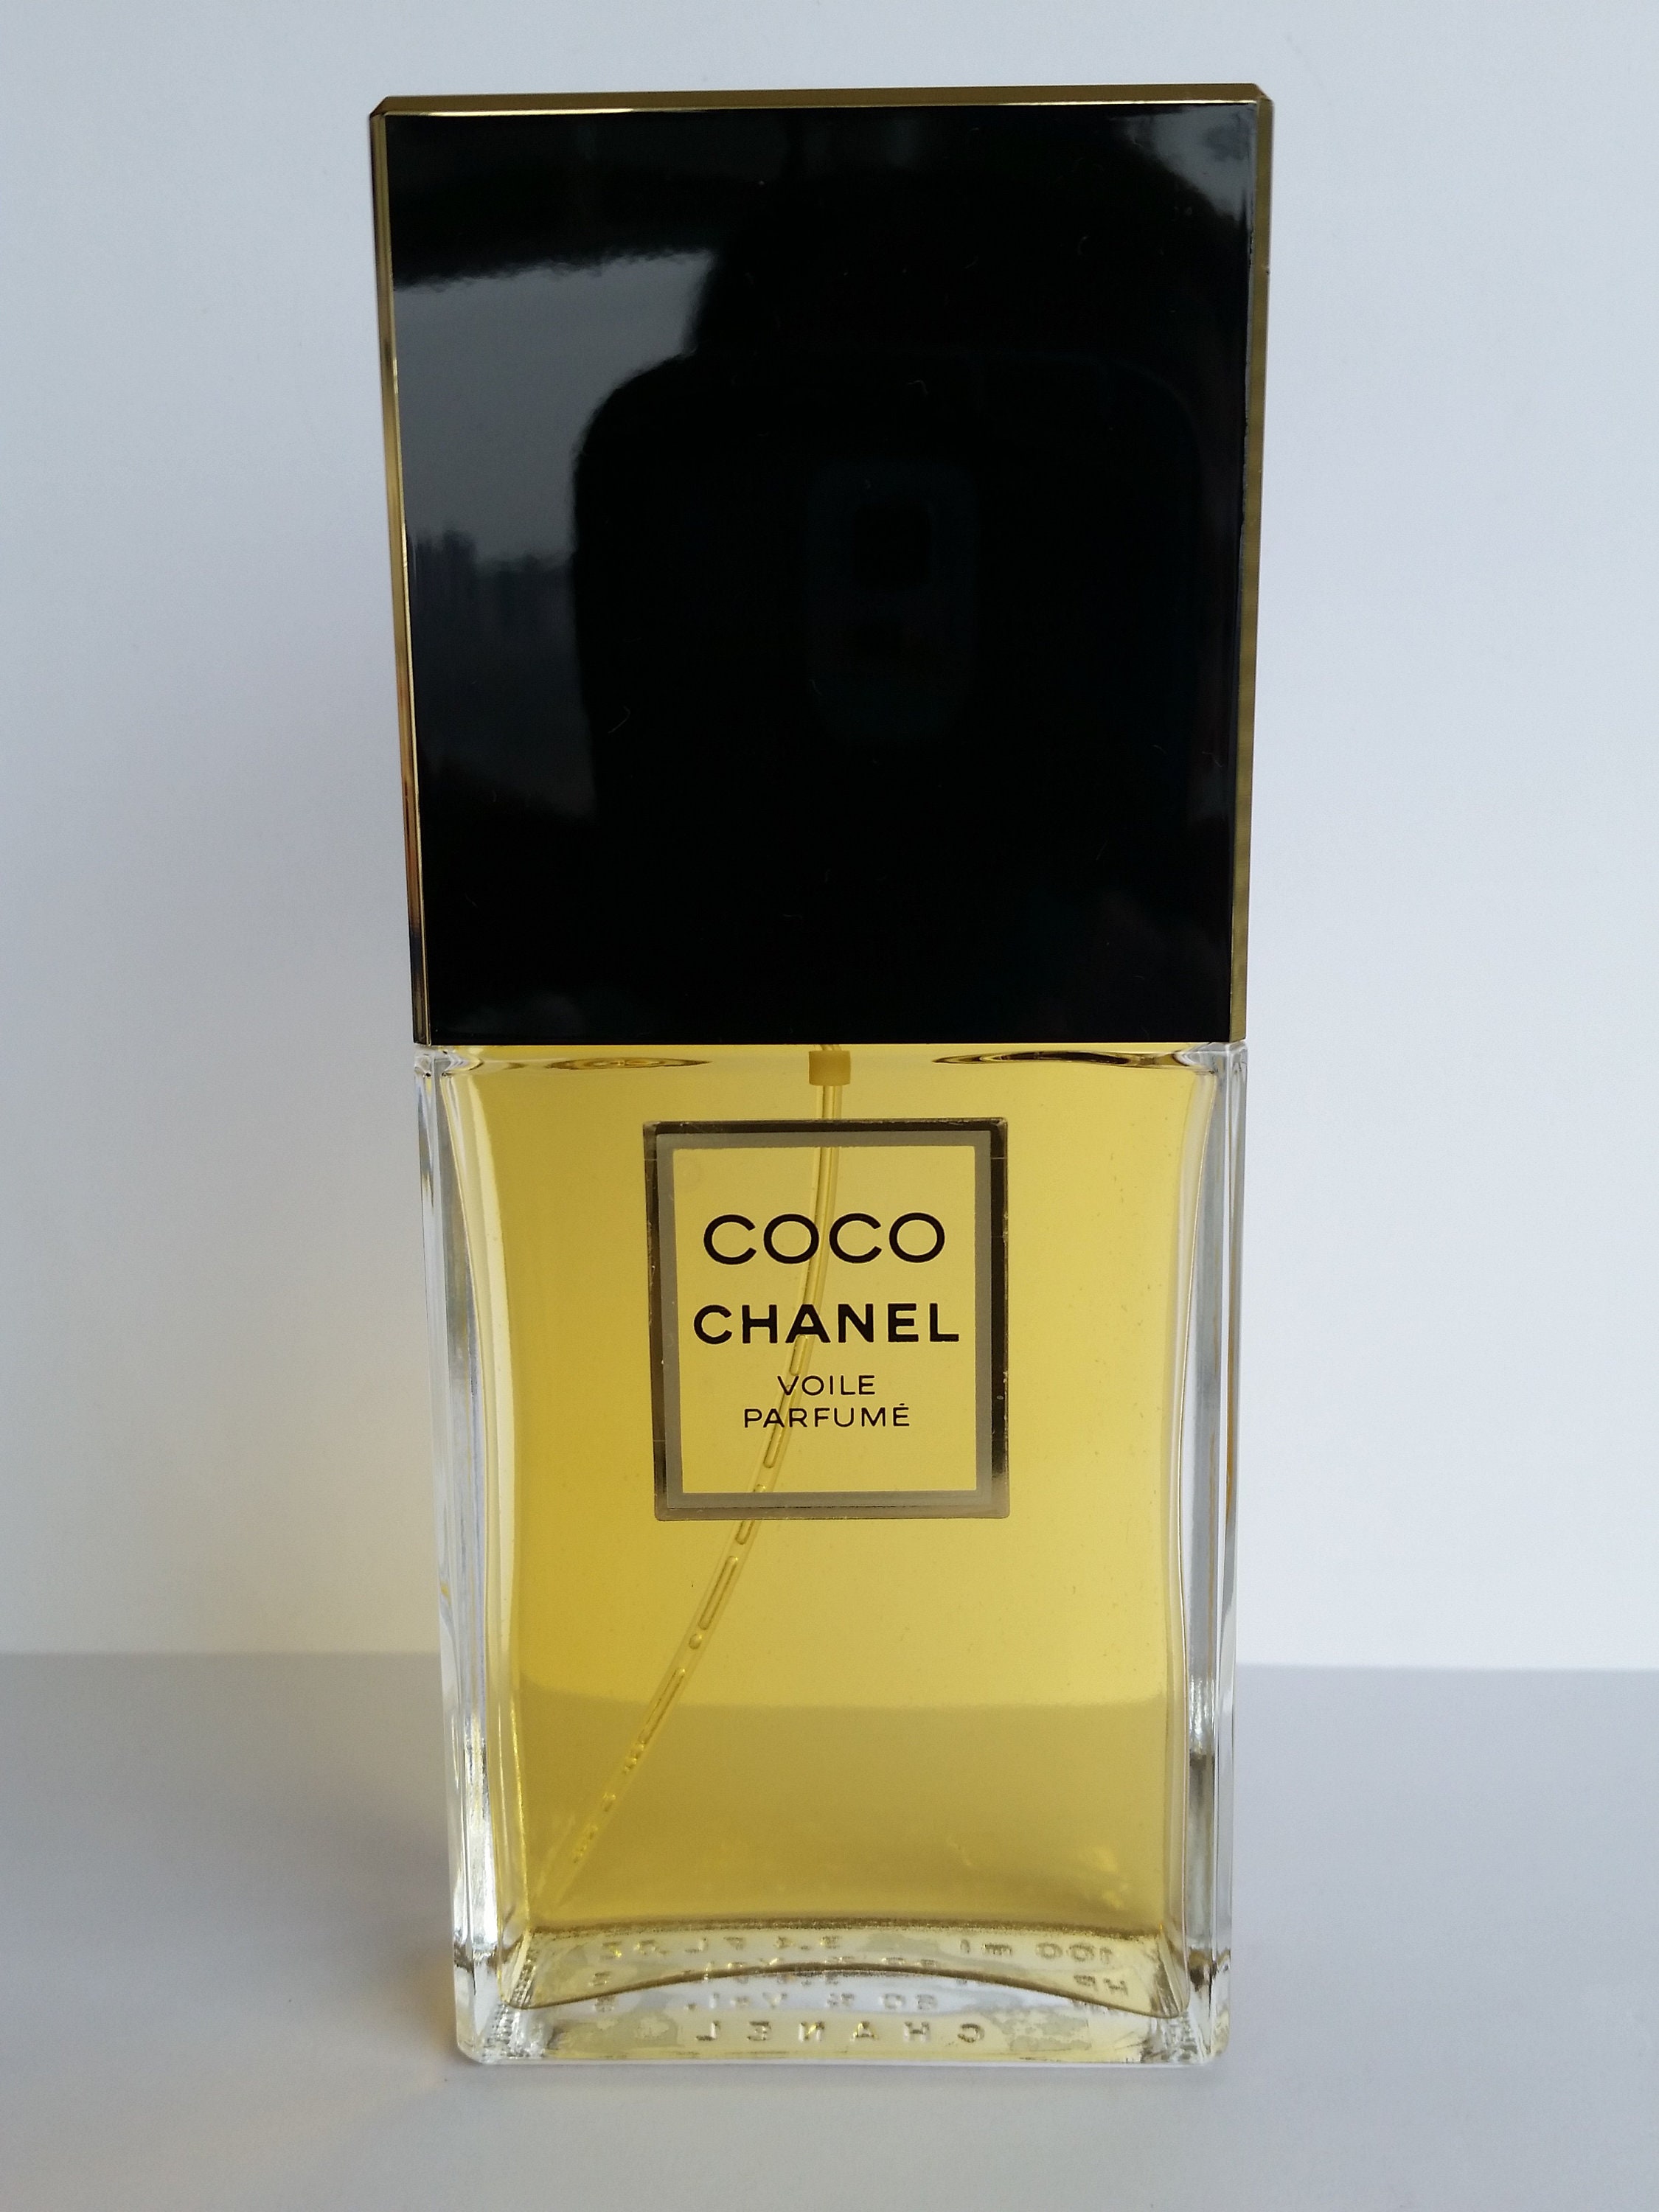 Vintage Chanel coco 100ml Voile Parfume Spray - Etsy